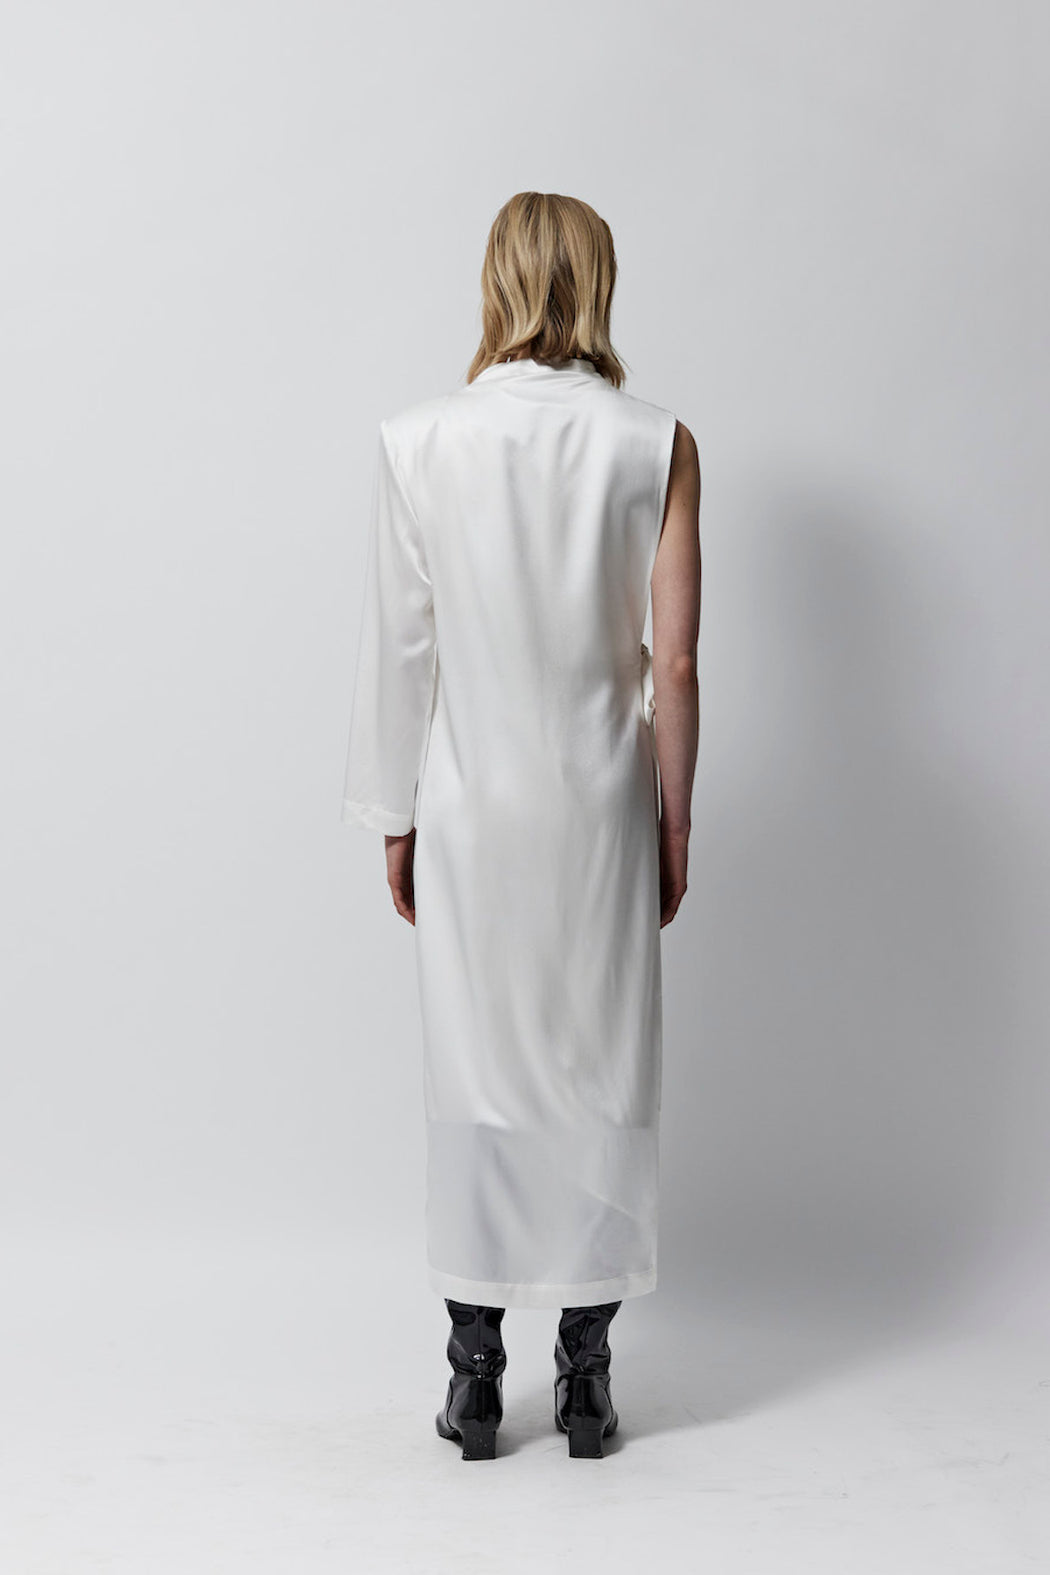 Envelope1976 Nom dress - Satin silk Dress White